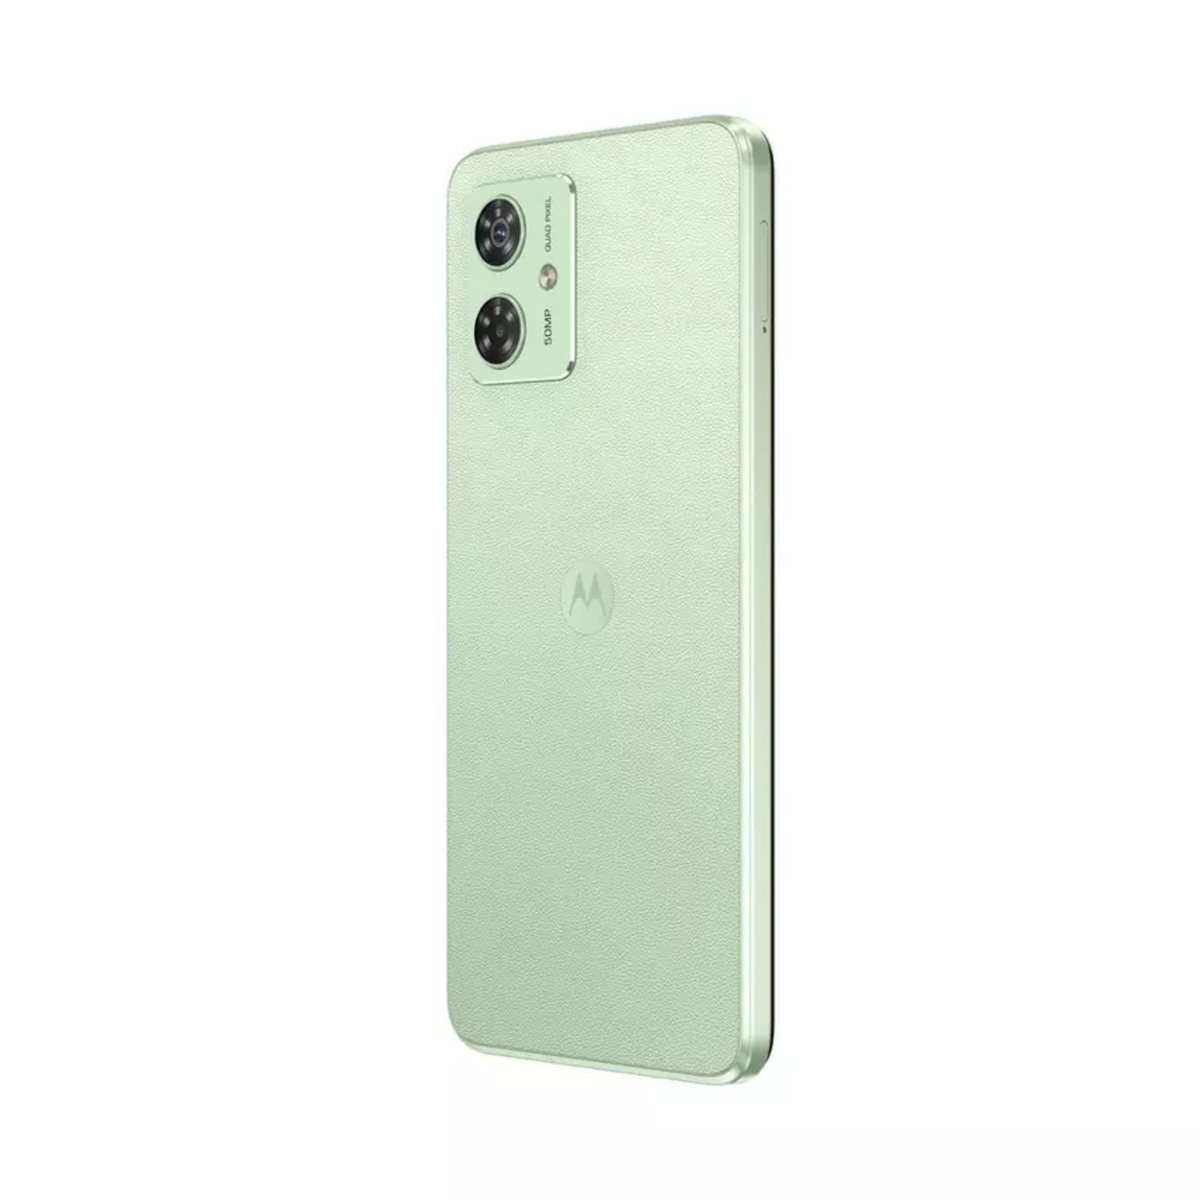 Motorola G54 5G Smartphone, 8 GB RAM, 256 GB Storage, Mint Green